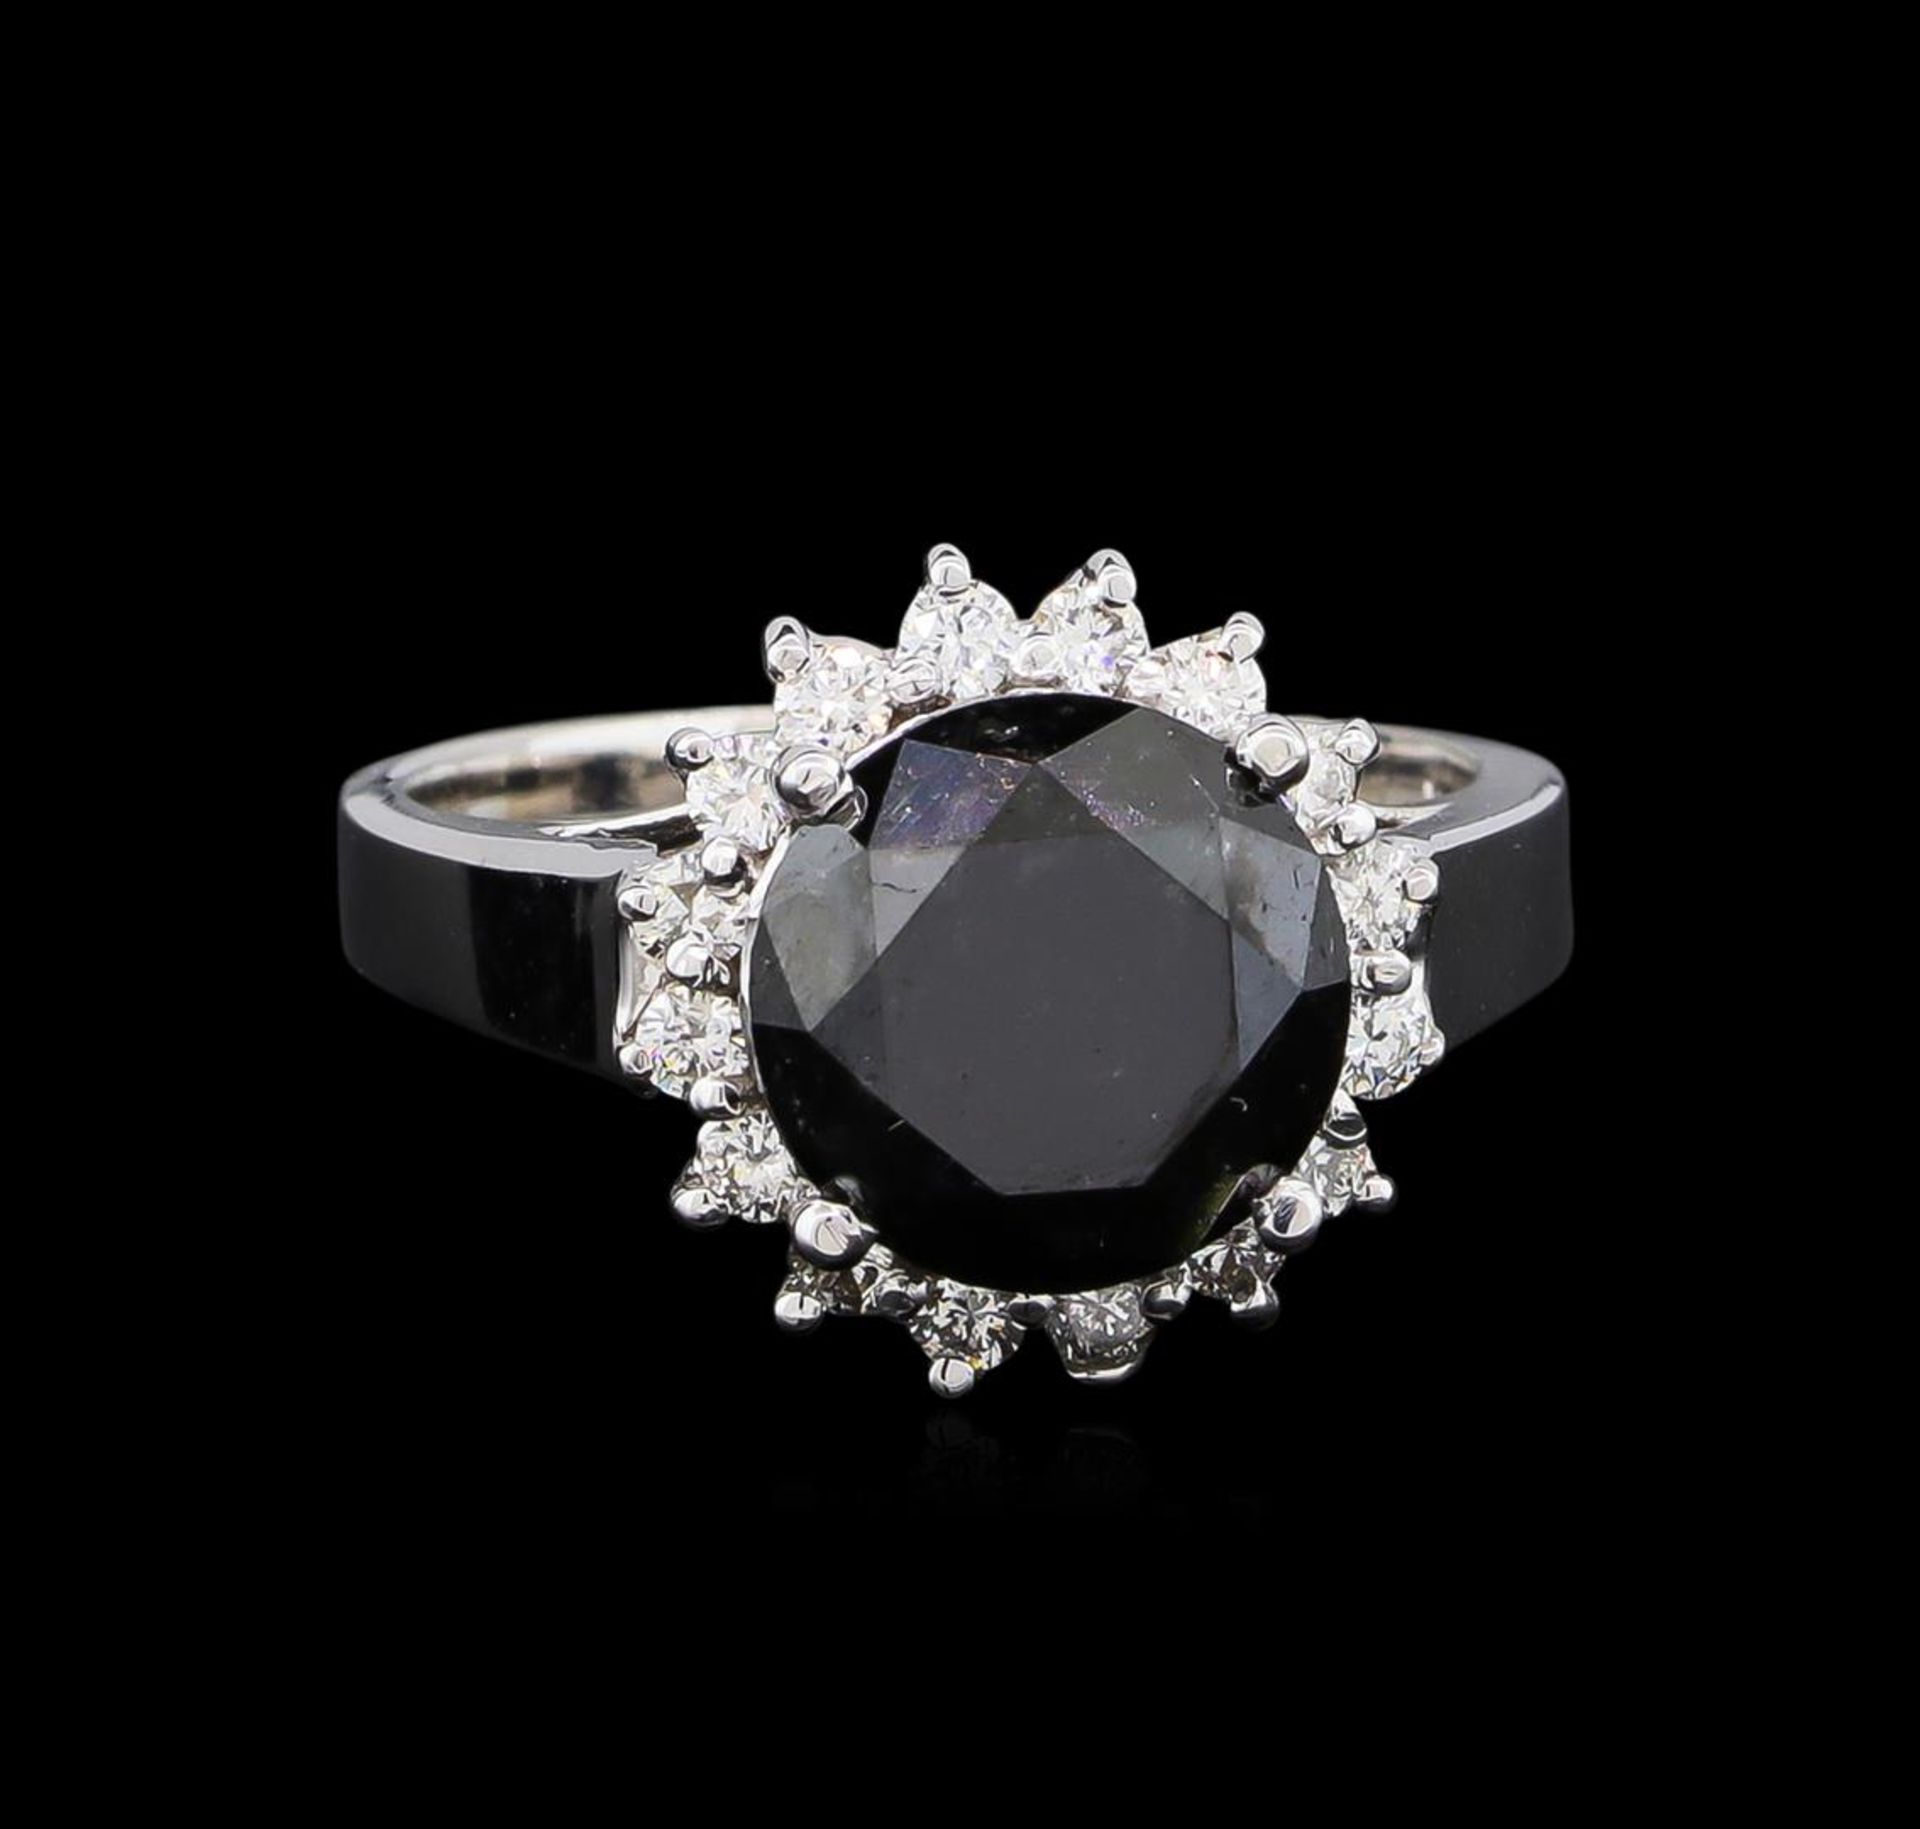 4.95 ctw Black Diamond Ring - 14KT White Gold - Image 2 of 4